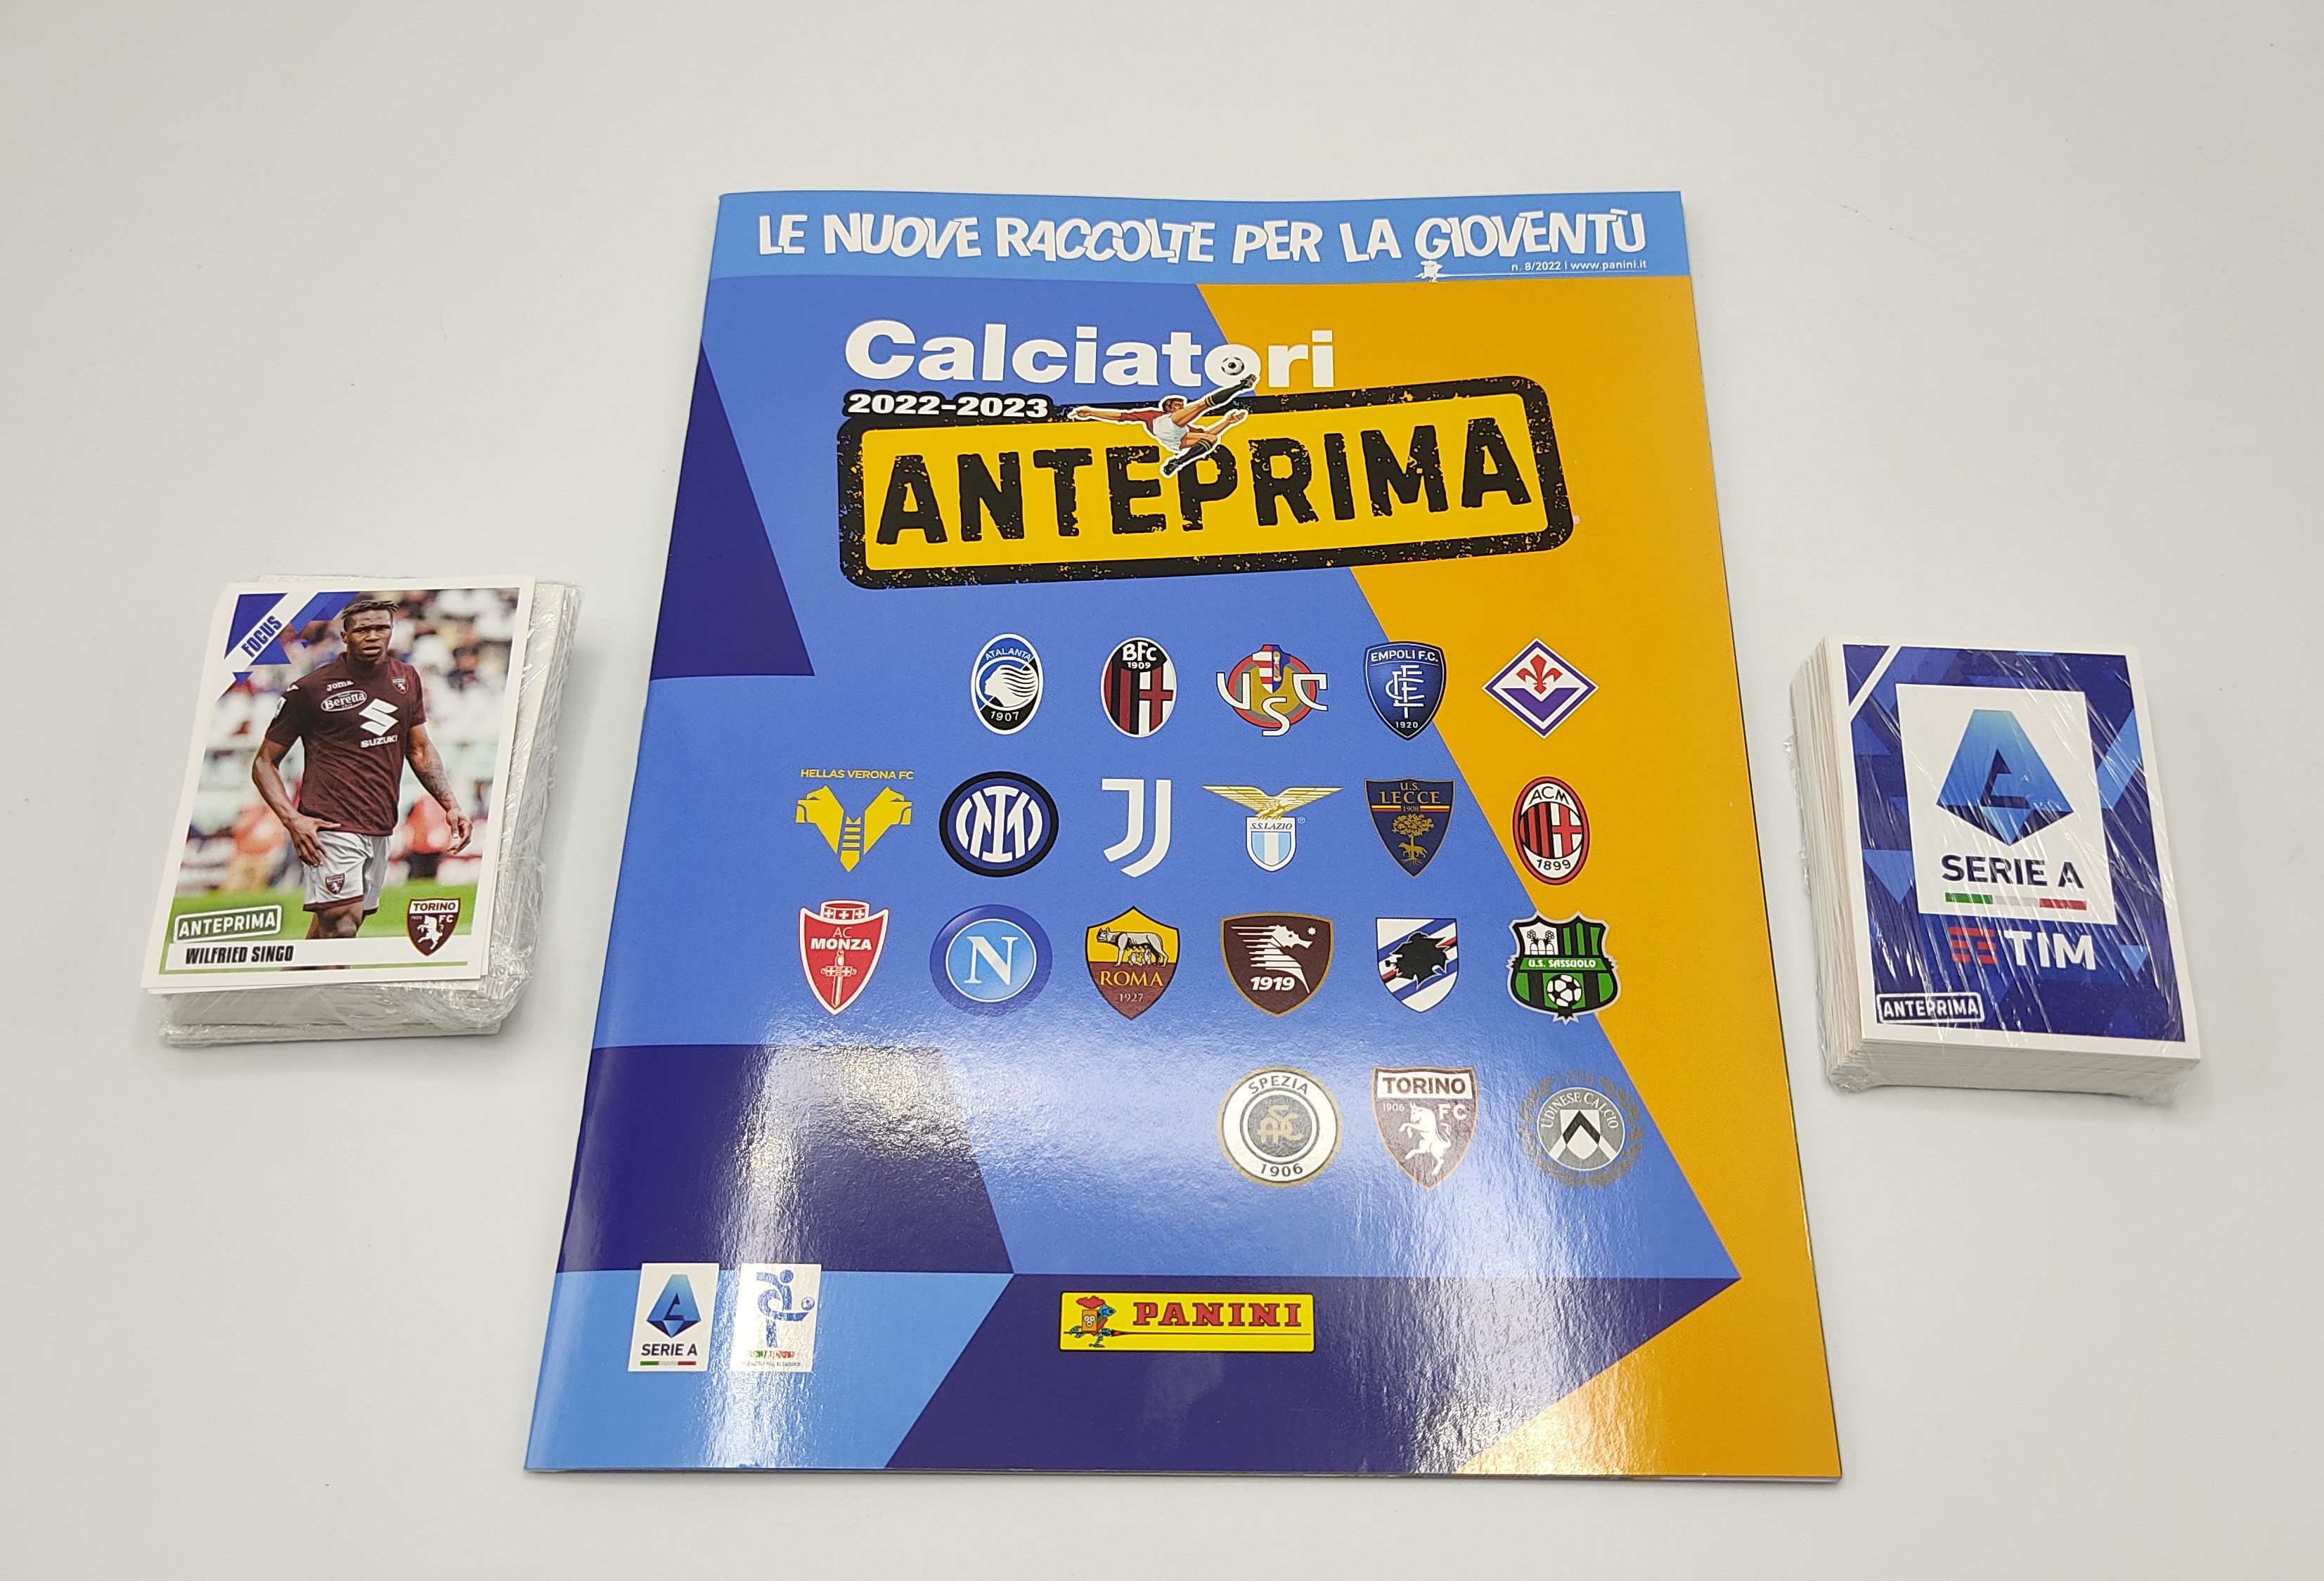 ANTEPRIMA Calciatori 2022 23 2023 - Album vuoto + set completo figurine Panini